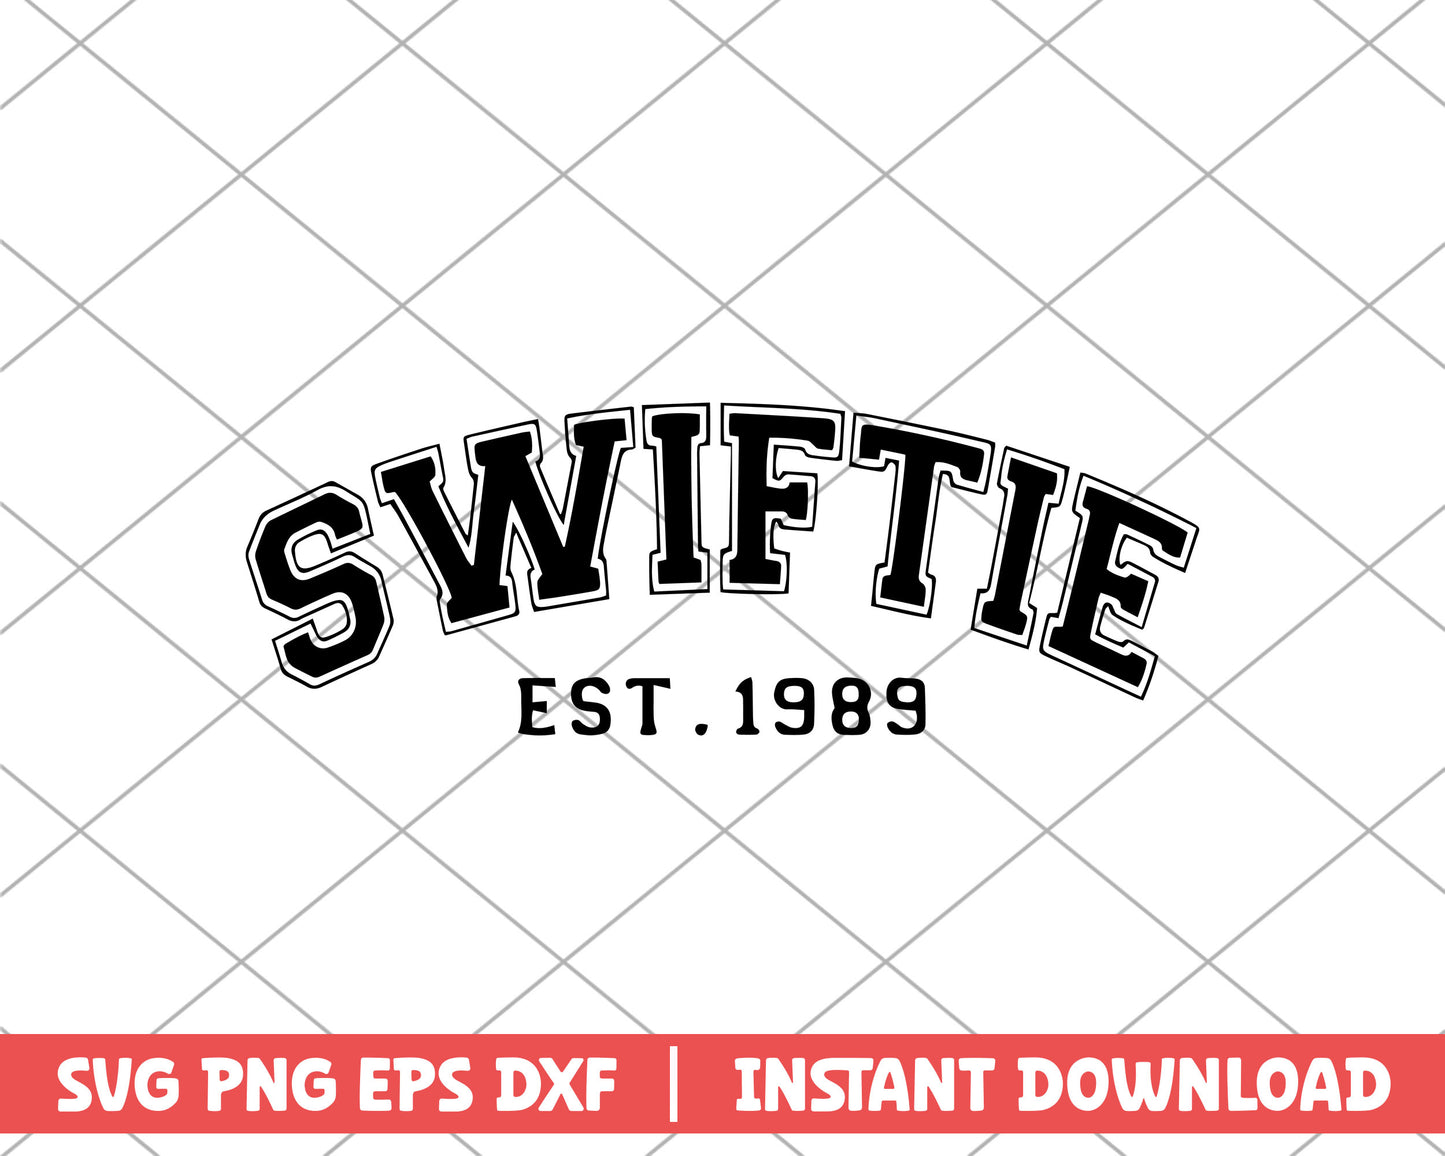 Swiftie est.1989 taylor swift svg